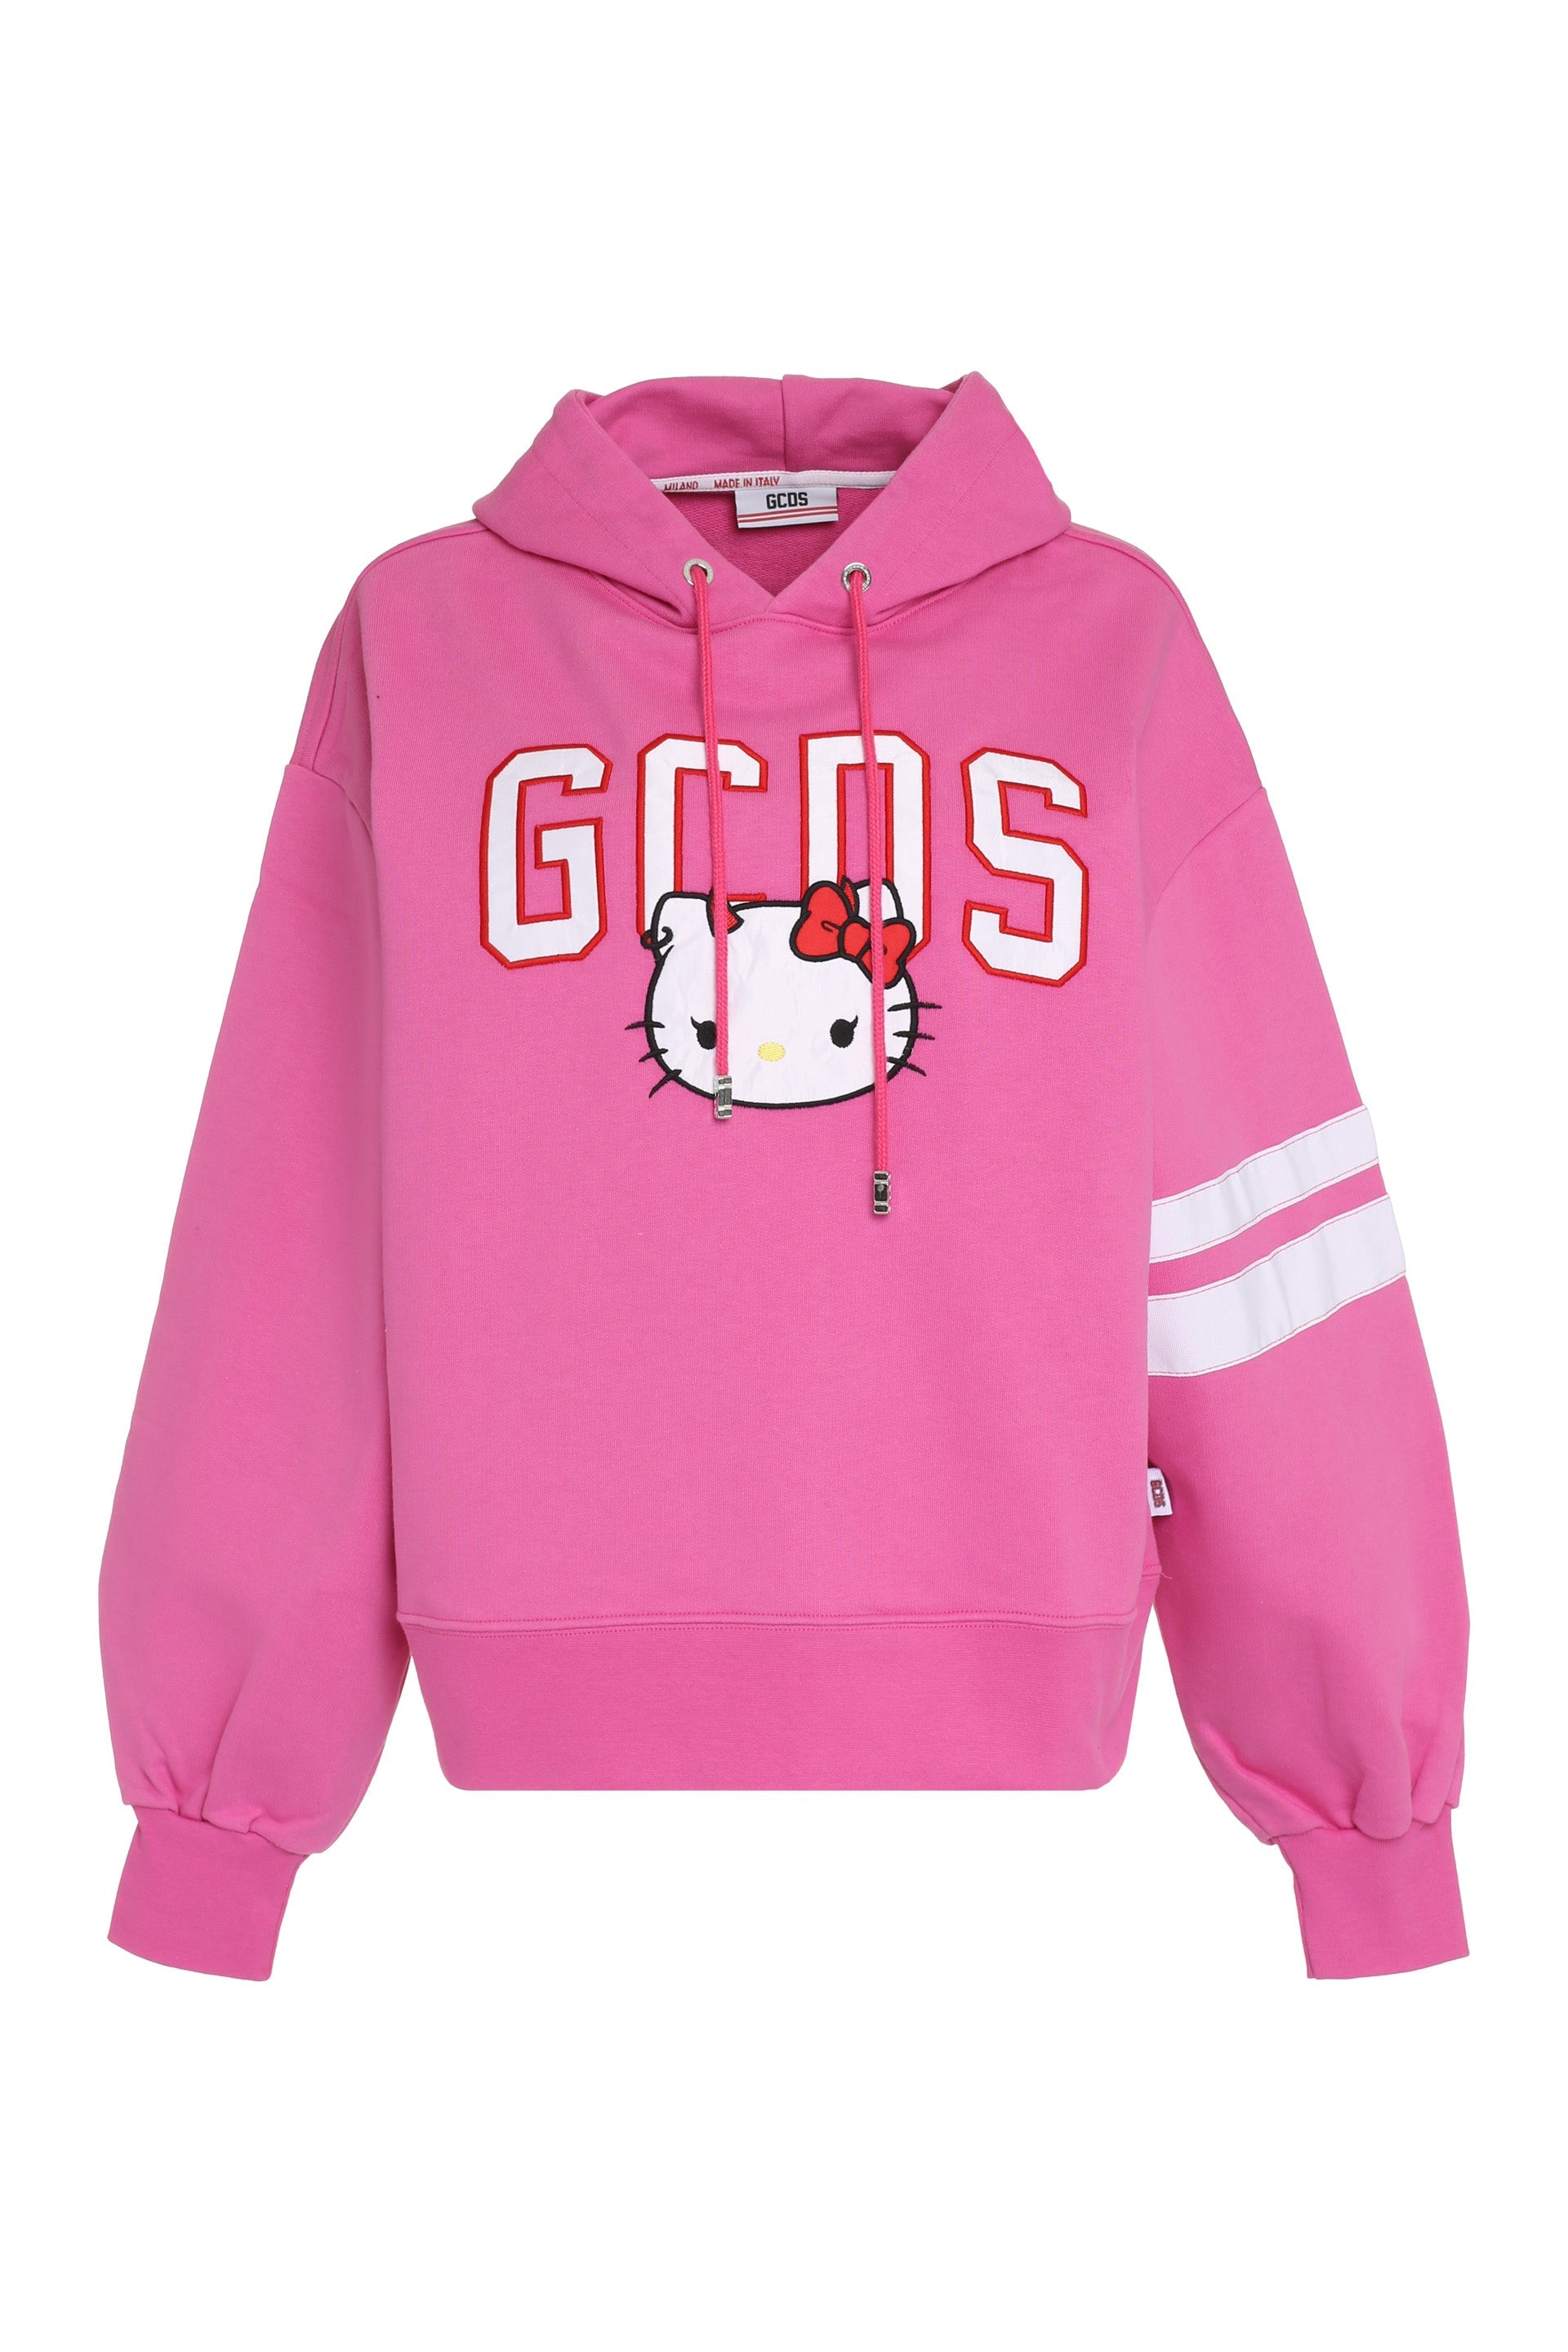 GCDS x Hello Kitty - Hooded sweatshirt-GCDS-OUTLET-SALE-XS-ARCHIVIST